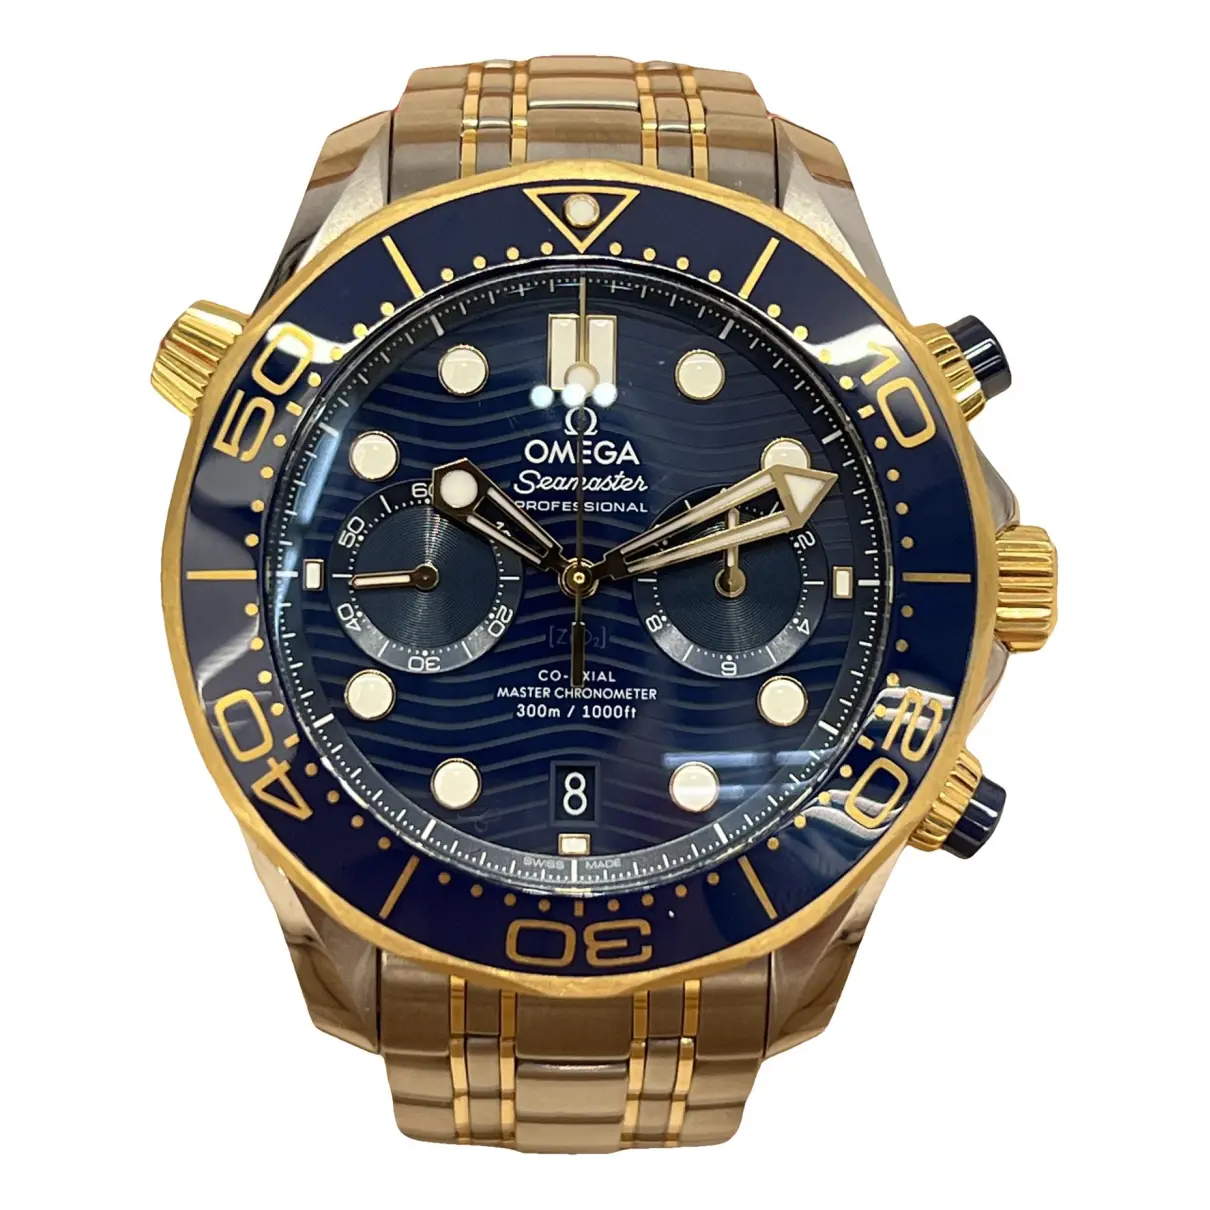 Seamaster 300 Chronographe watch